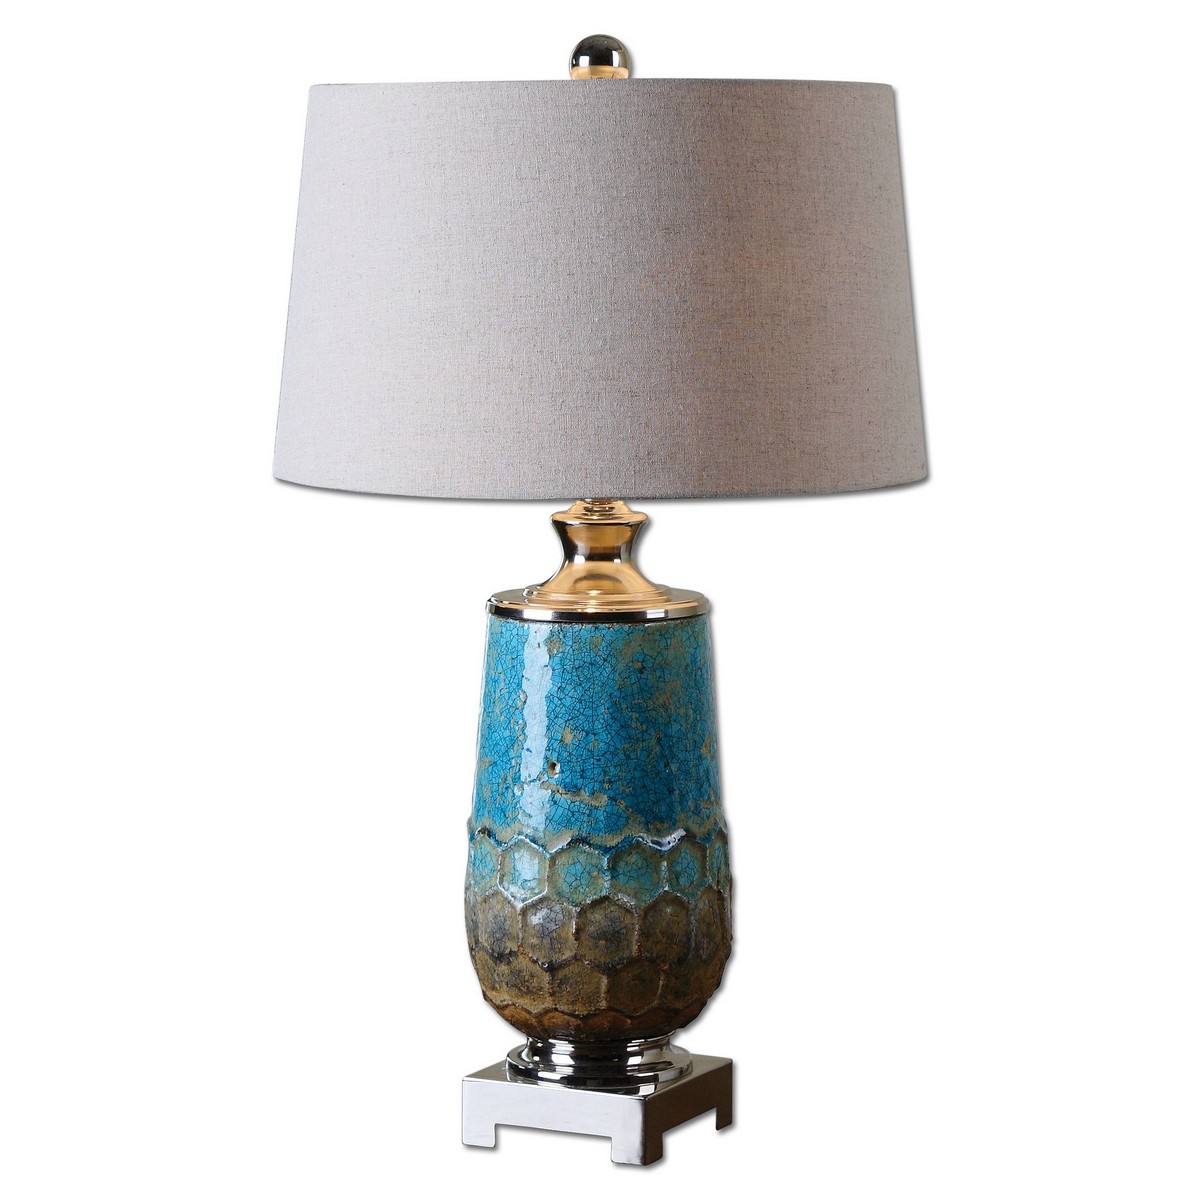 Uttermost Manzu Blue Ceramic Table Lamp